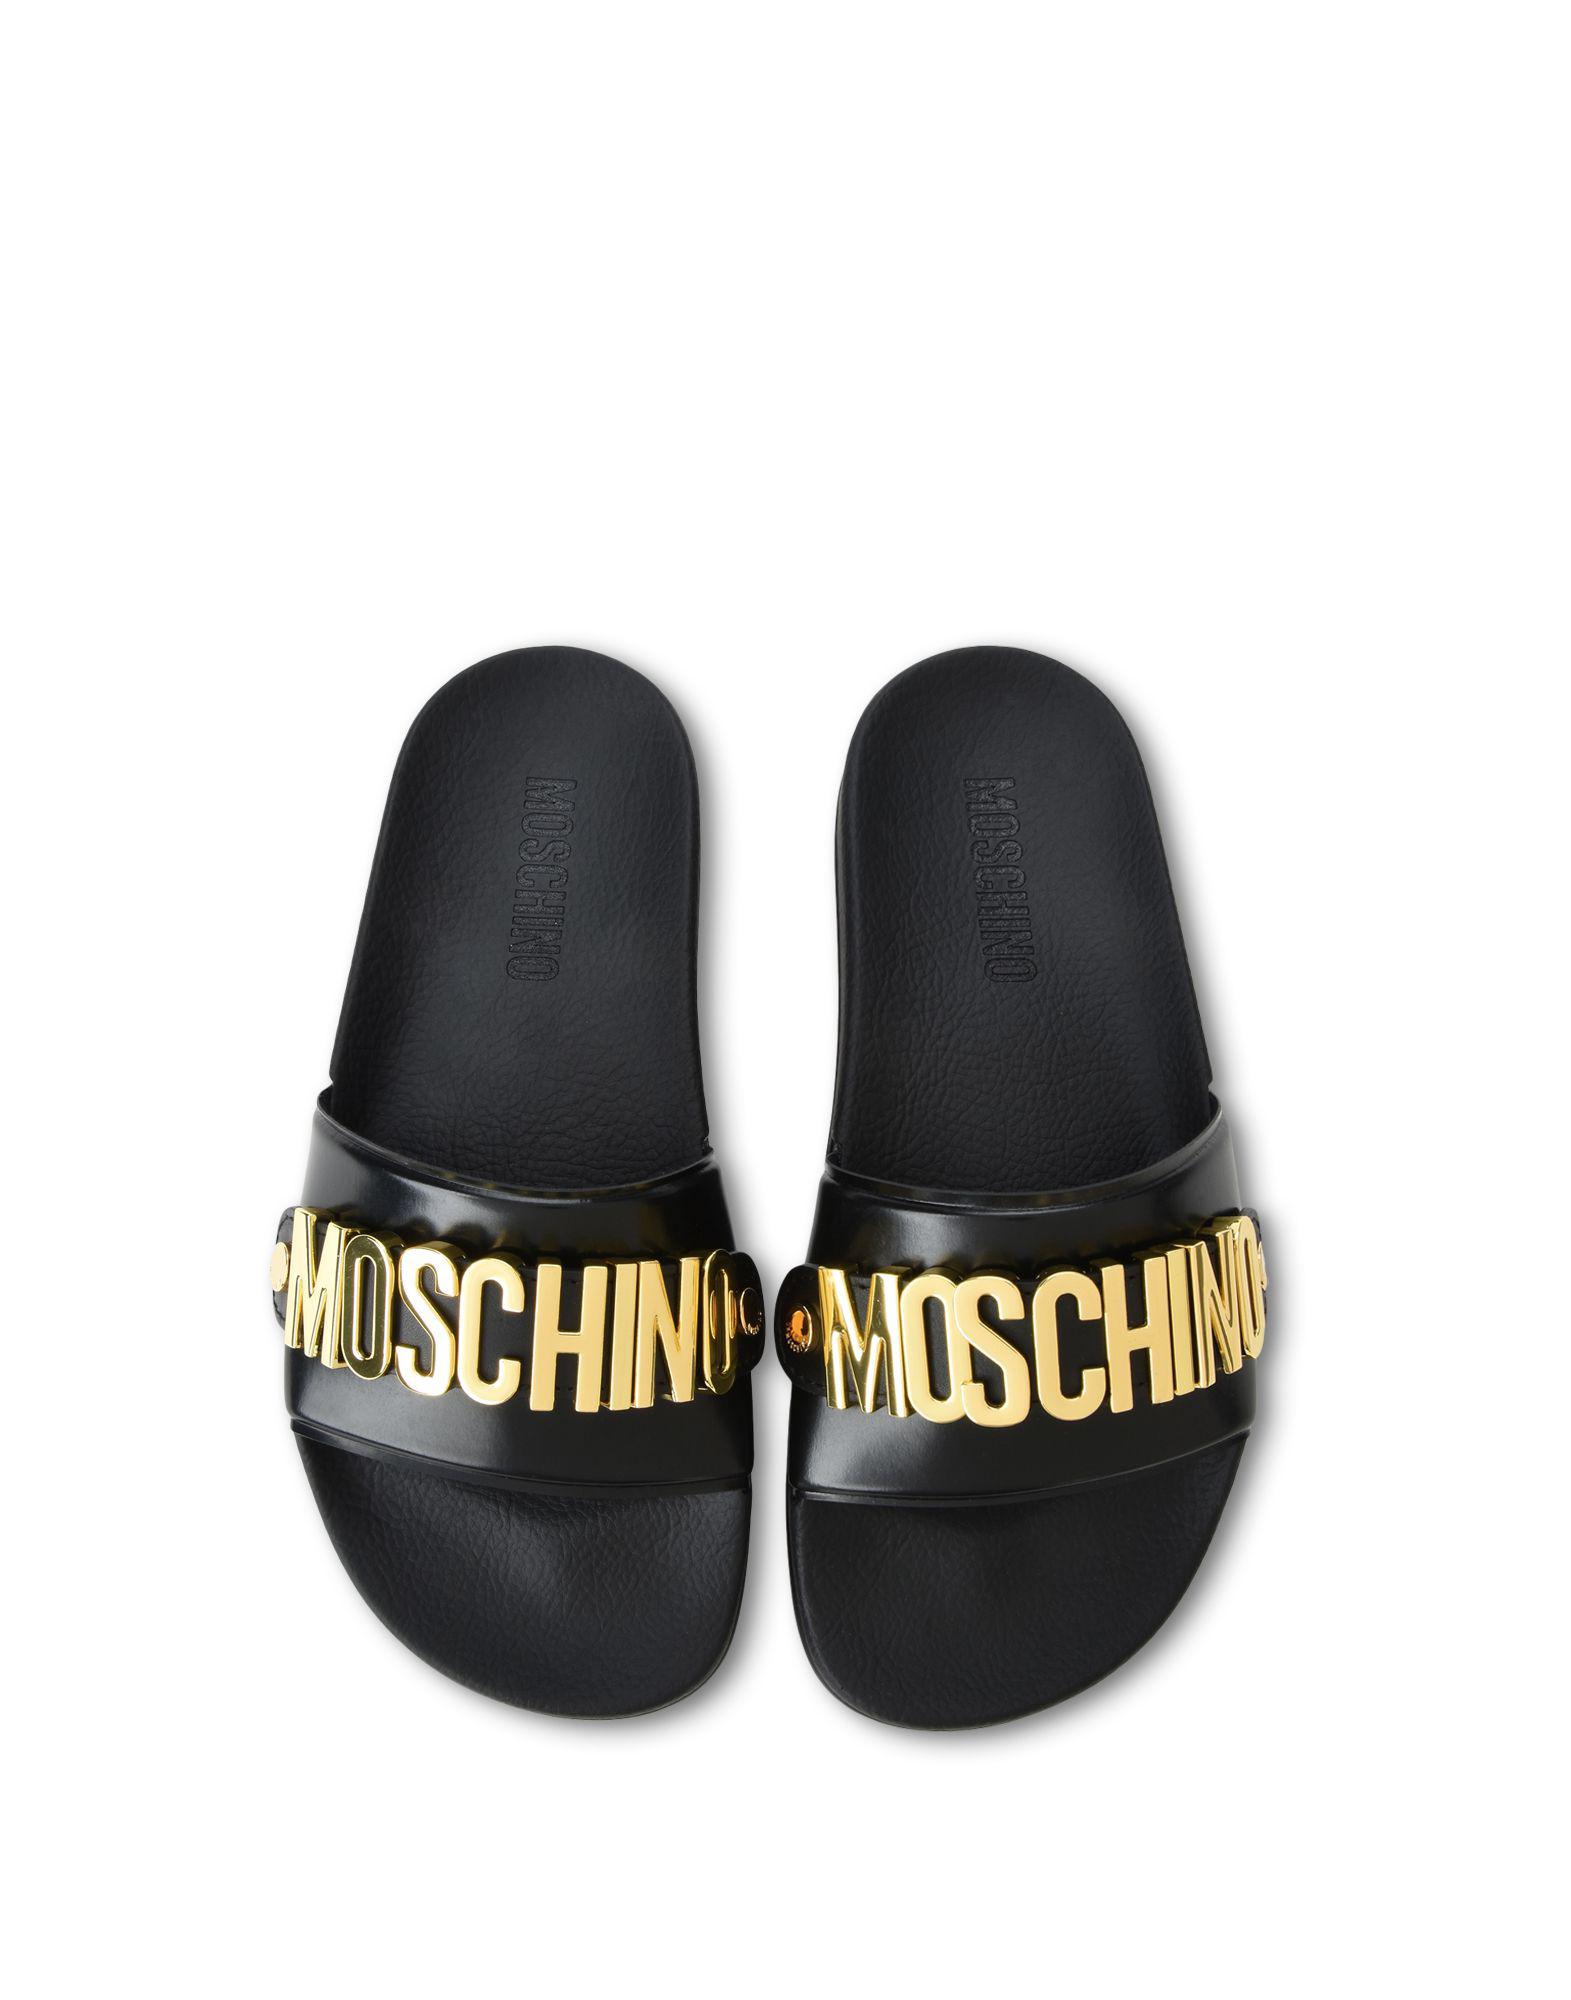 Moschino Rubber Slide Sandals in Nero (Black) - Save 67% | Lyst